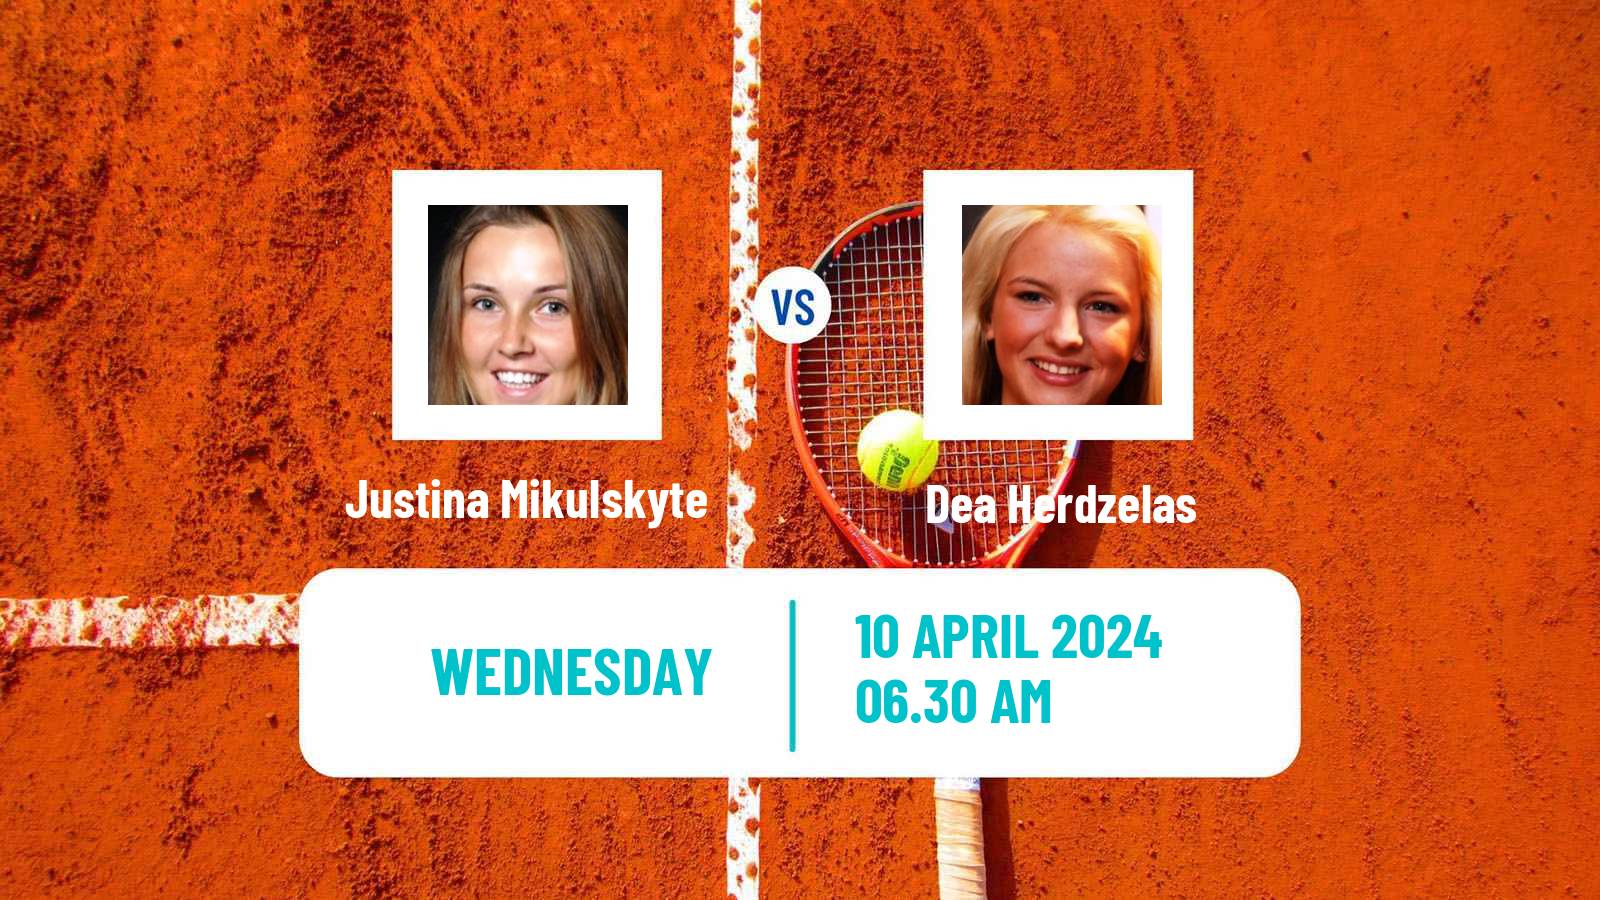 Tennis WTA Billie Jean King Cup Group II Justina Mikulskyte - Dea Herdzelas